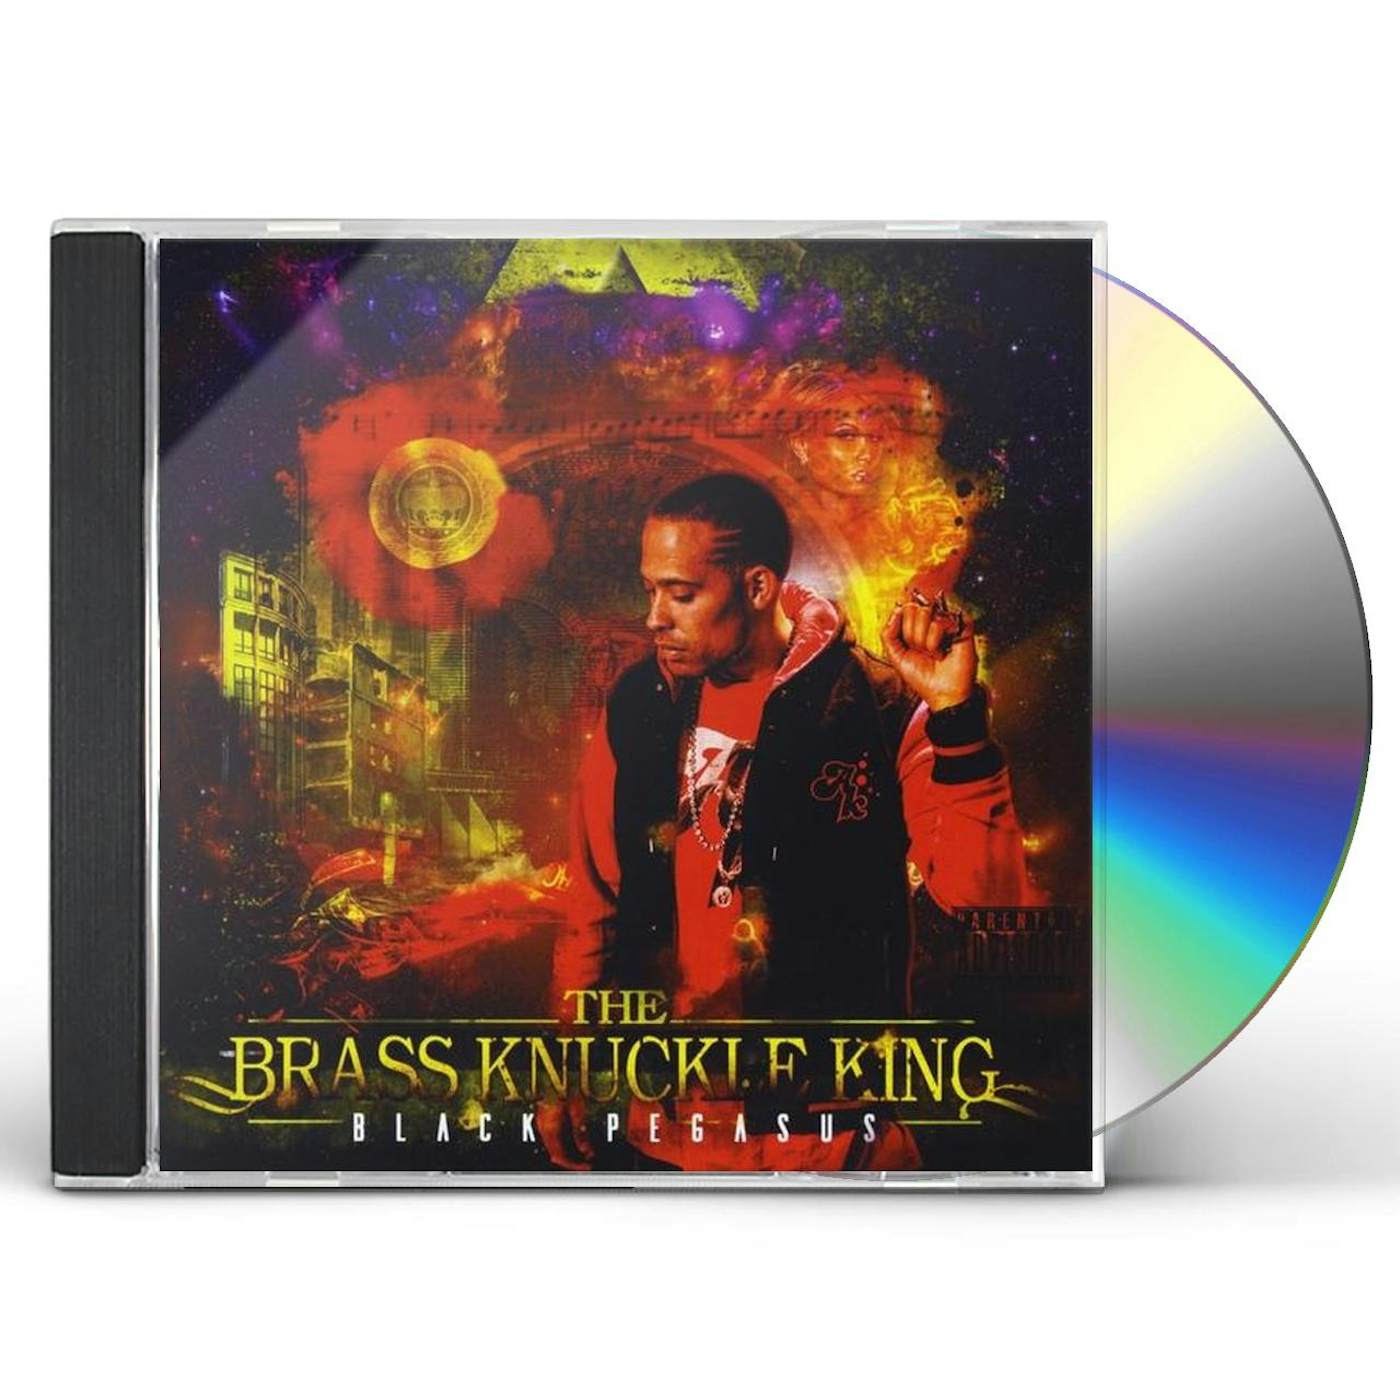 Black Pegasus BRASS KNUCKLE KING CD